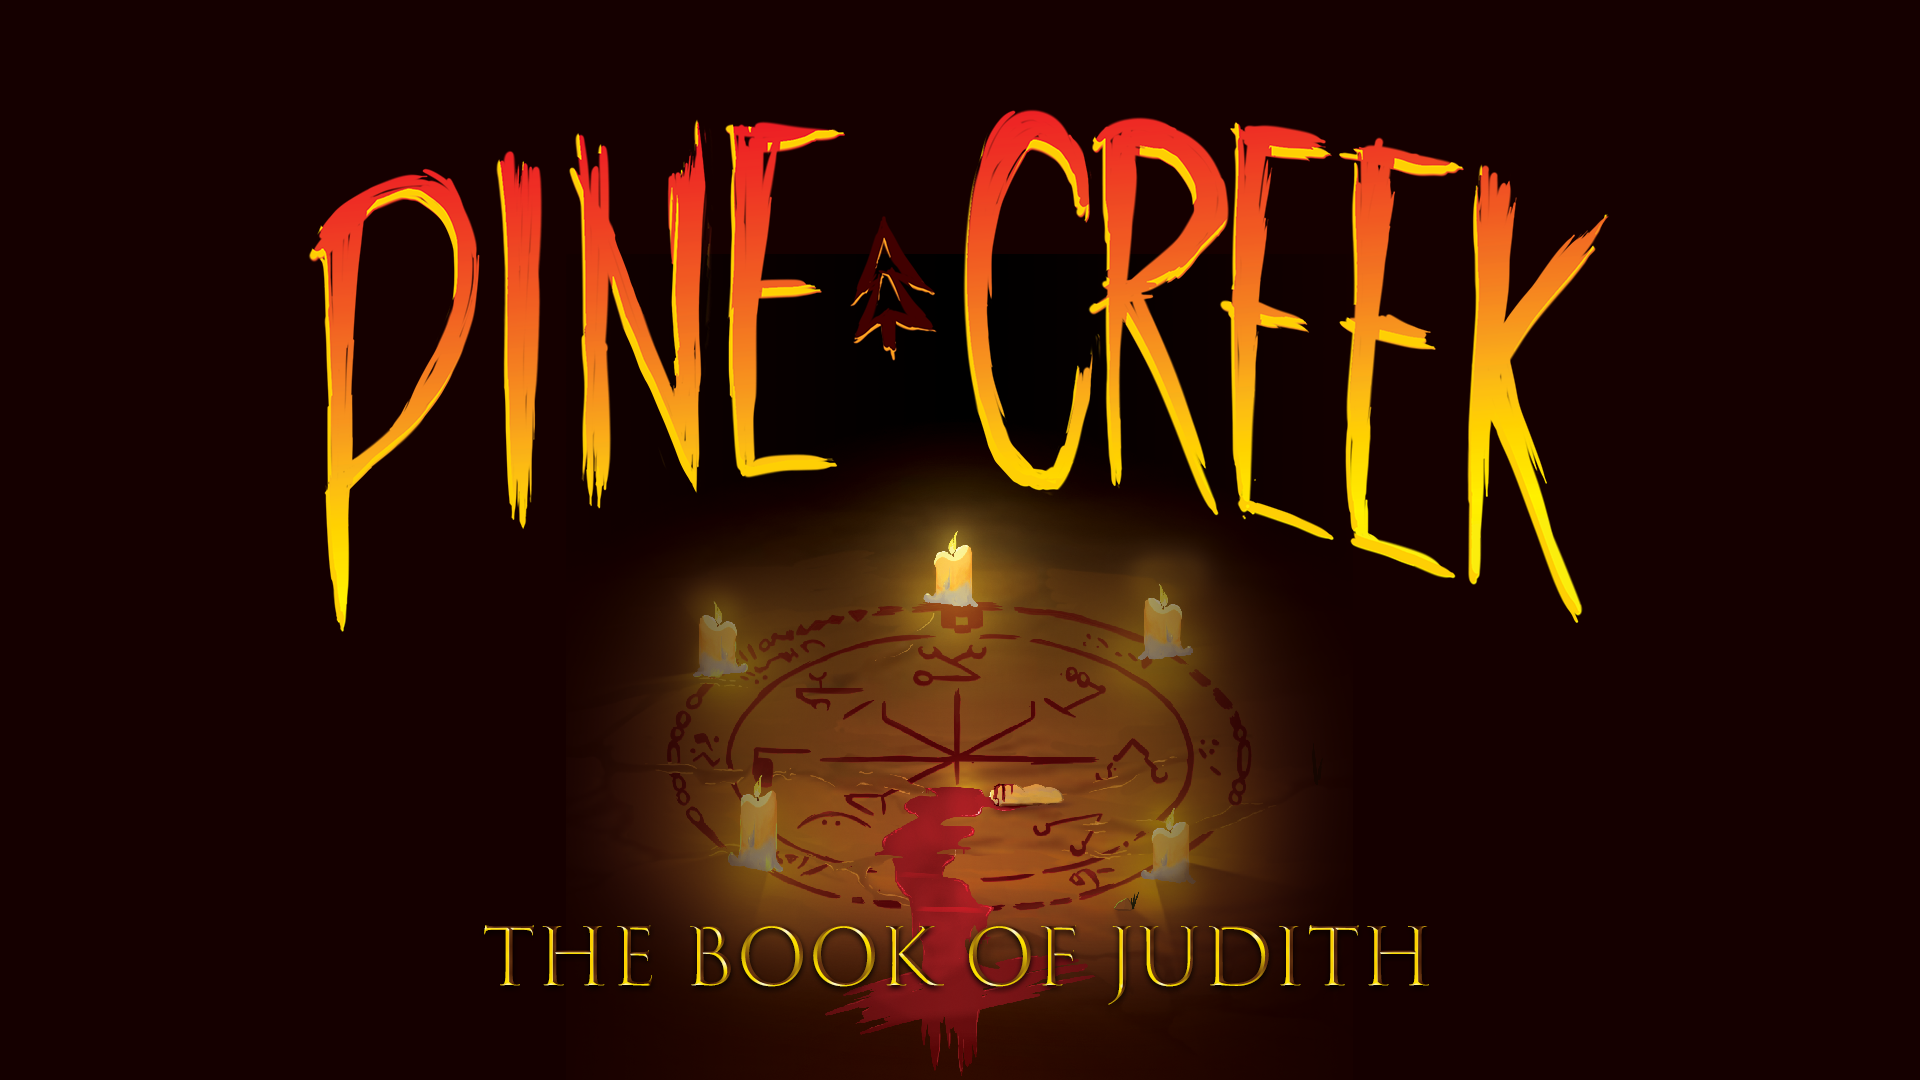 Pine Creek: The Book of Judith